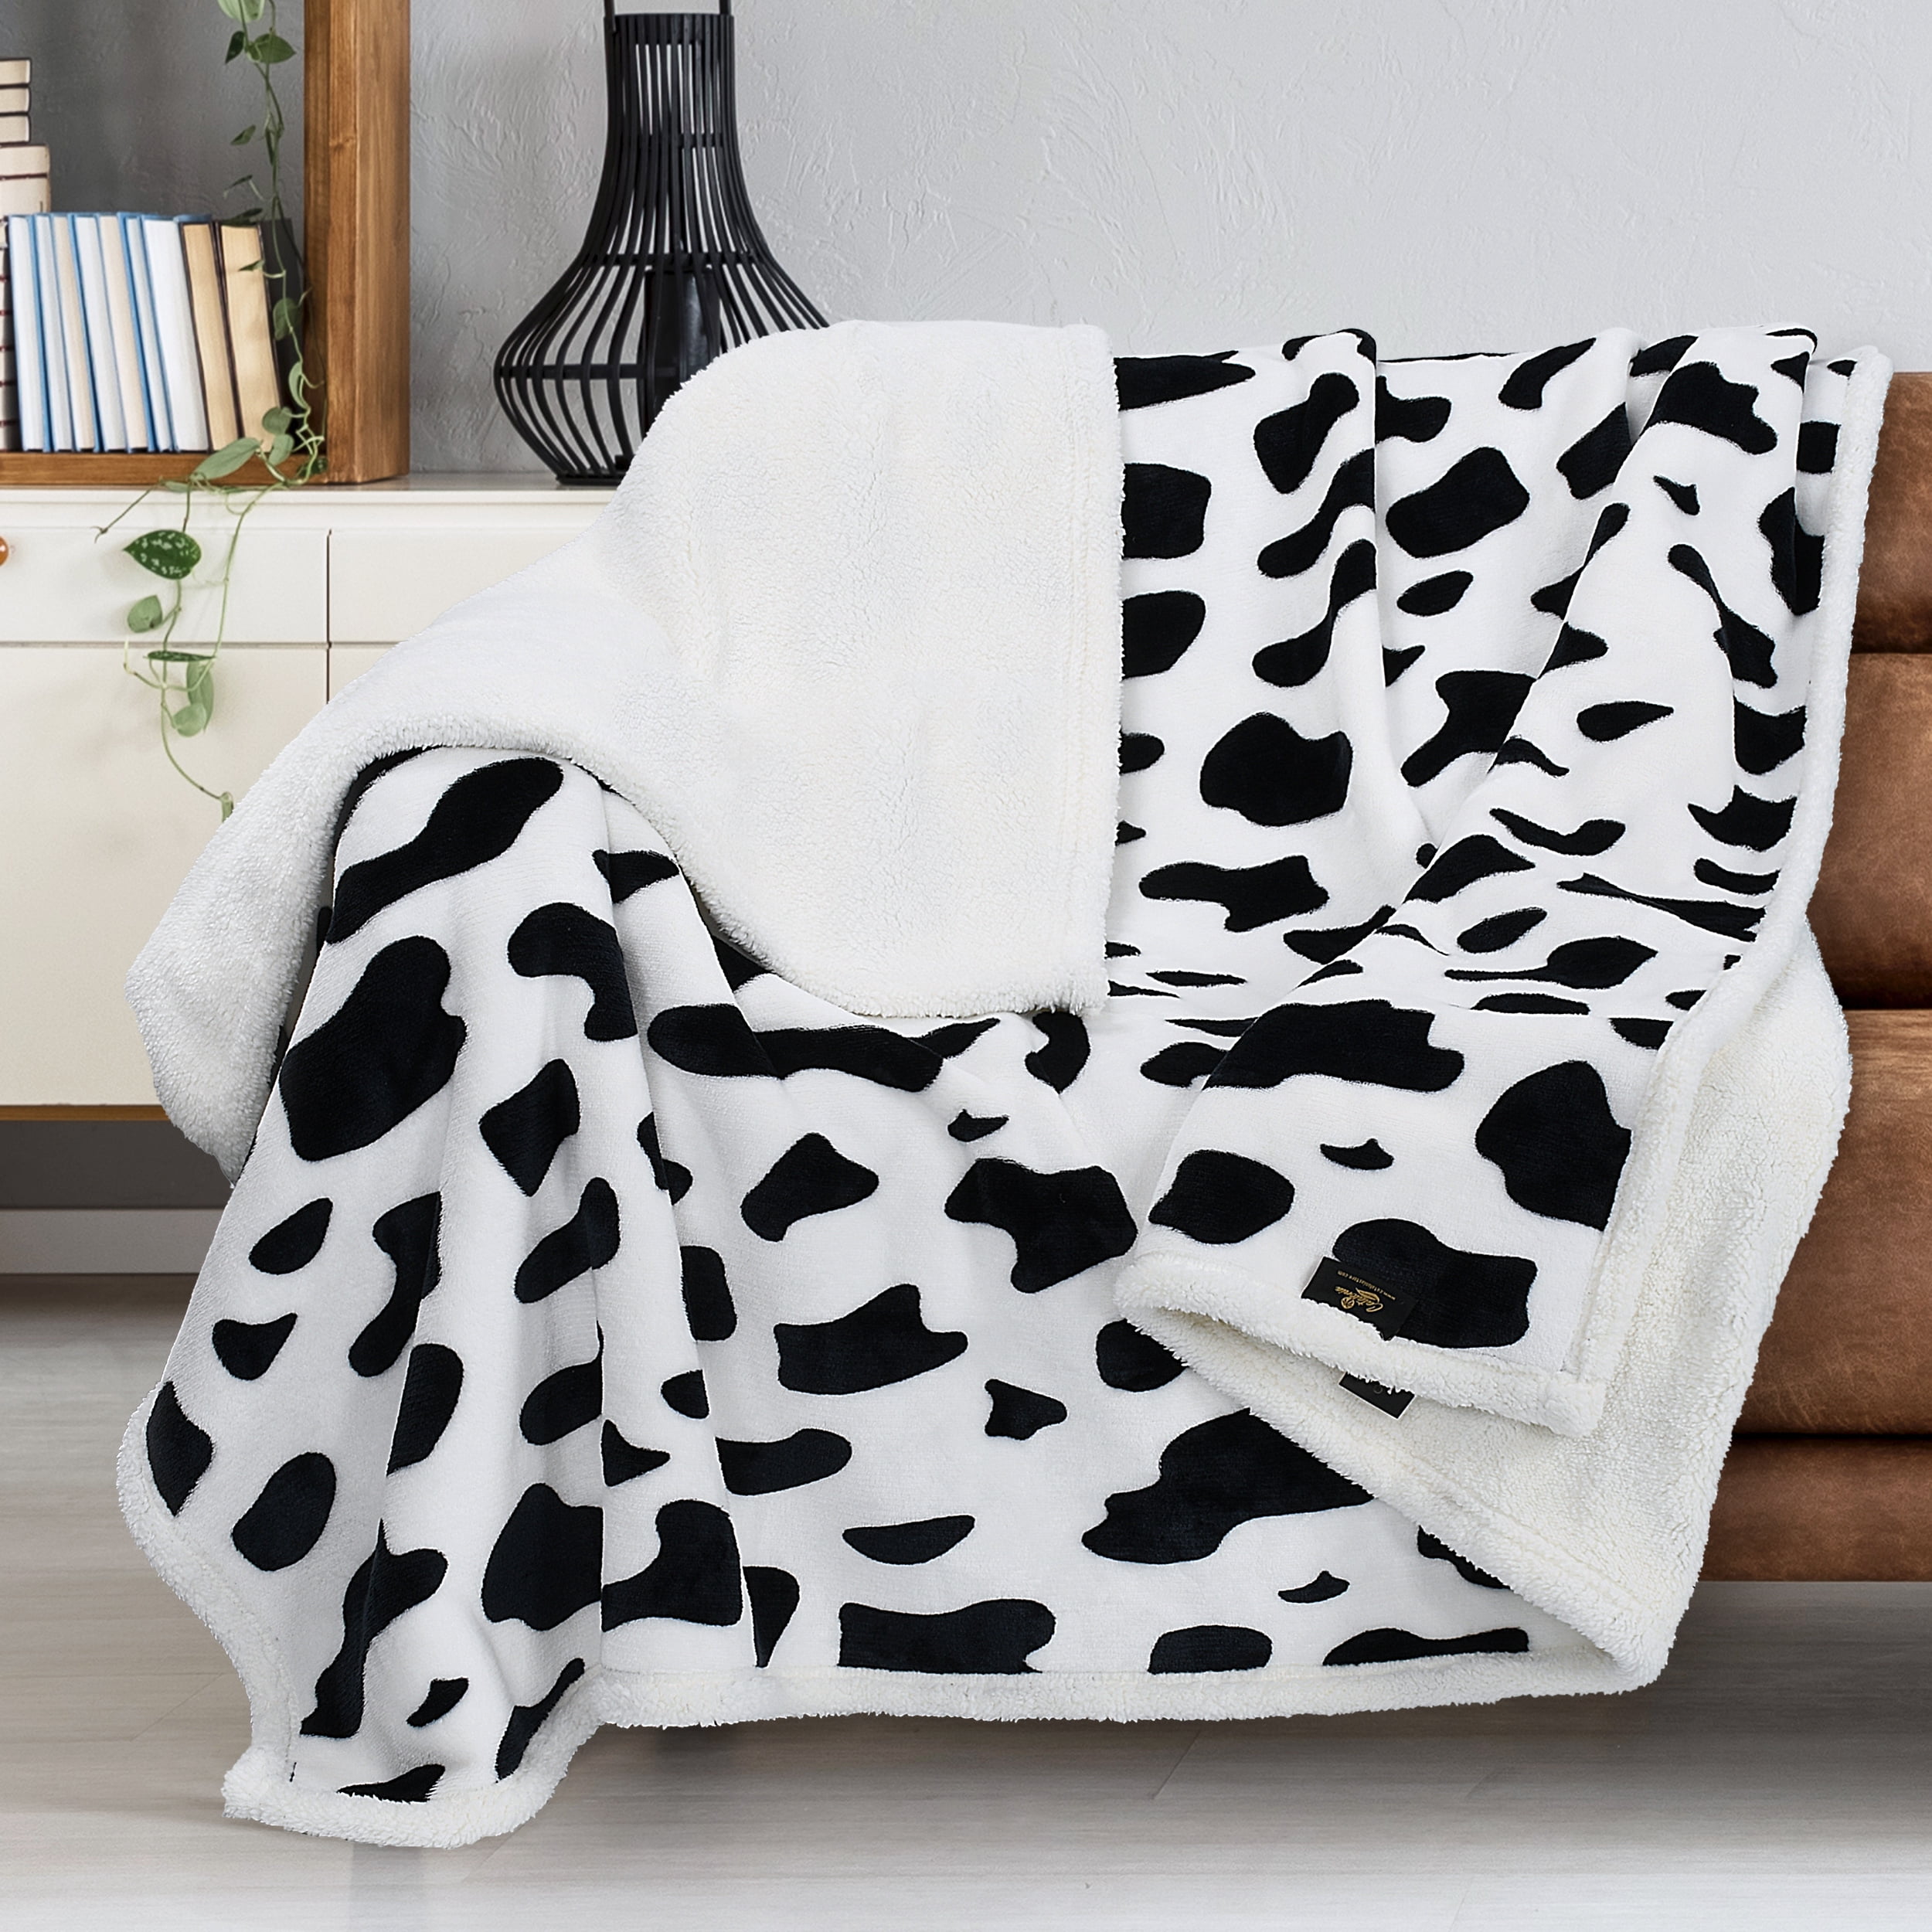 THROW  SNOW LEOPARD Print NEW Fleece Soft Warm Sofa Bedblanket washable 3 sizes 